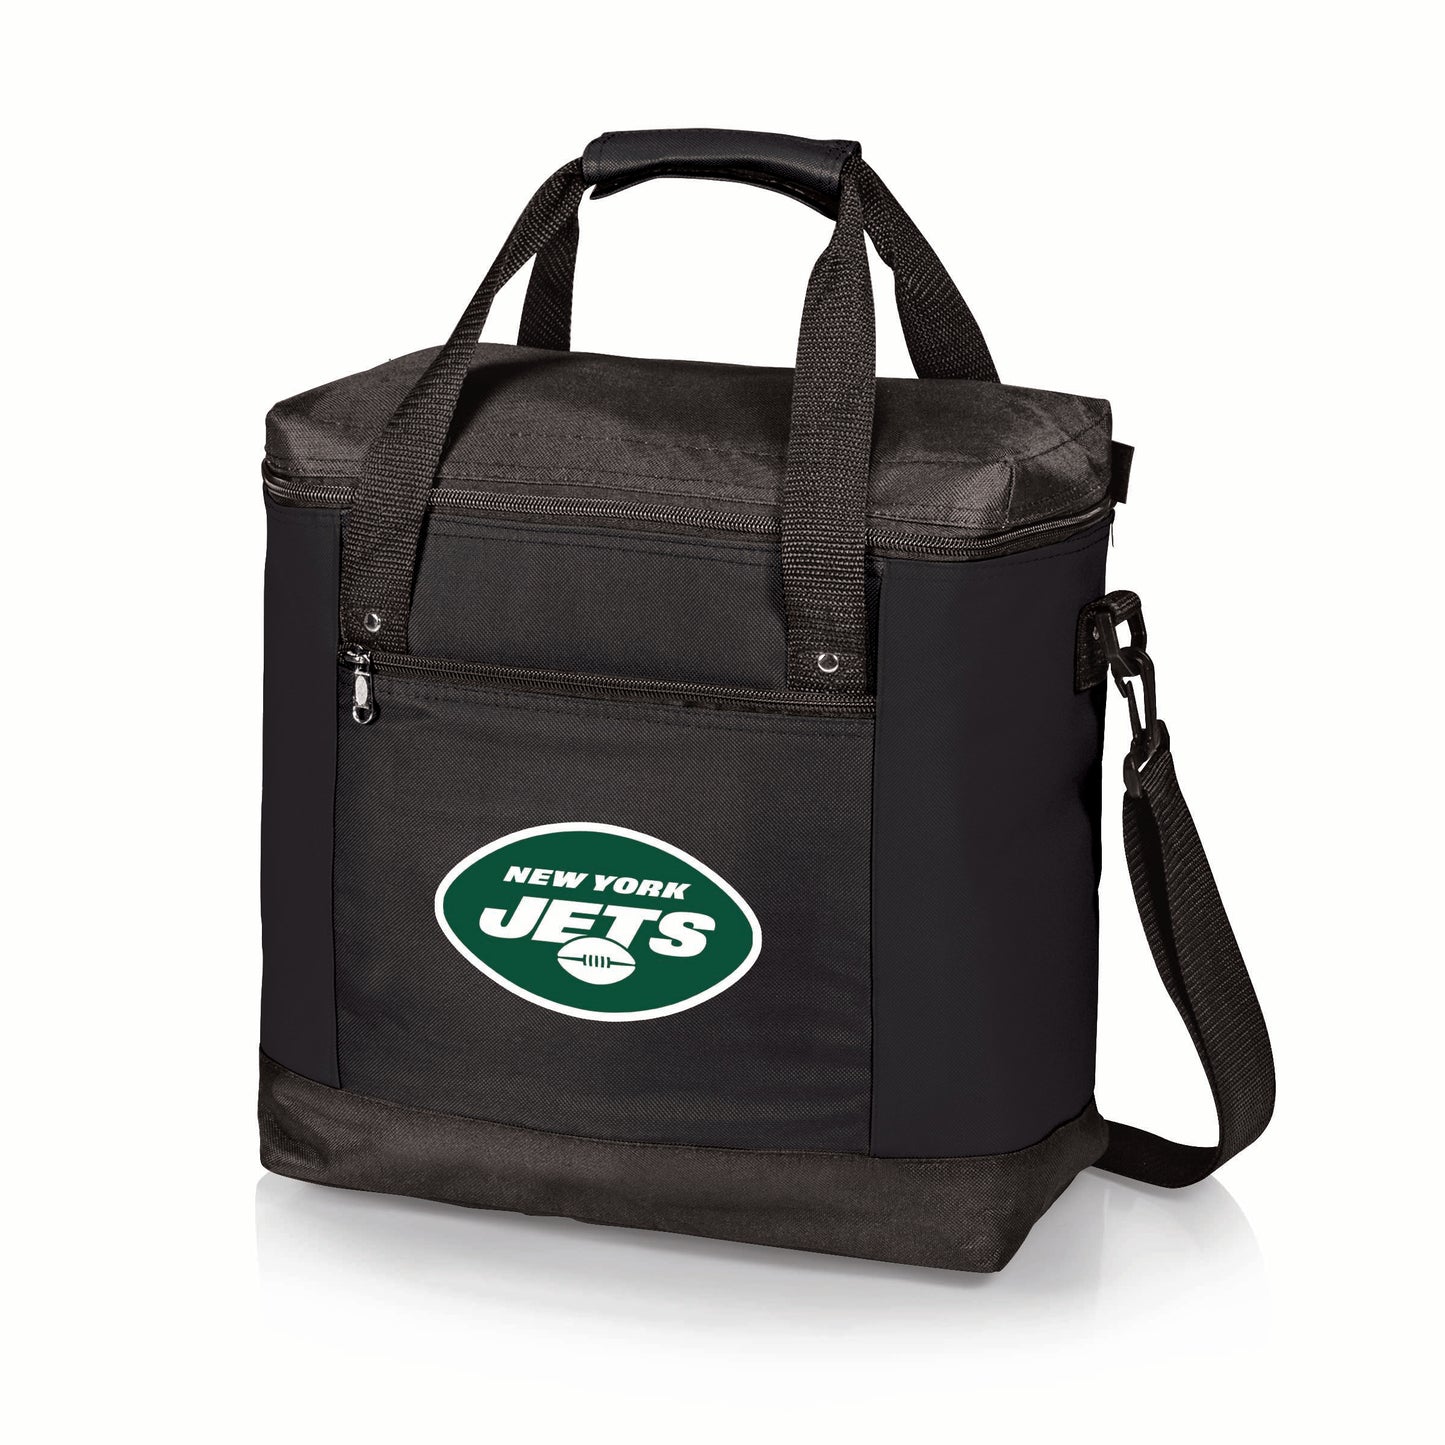 New York Jets - Montero Cooler Tote Bag